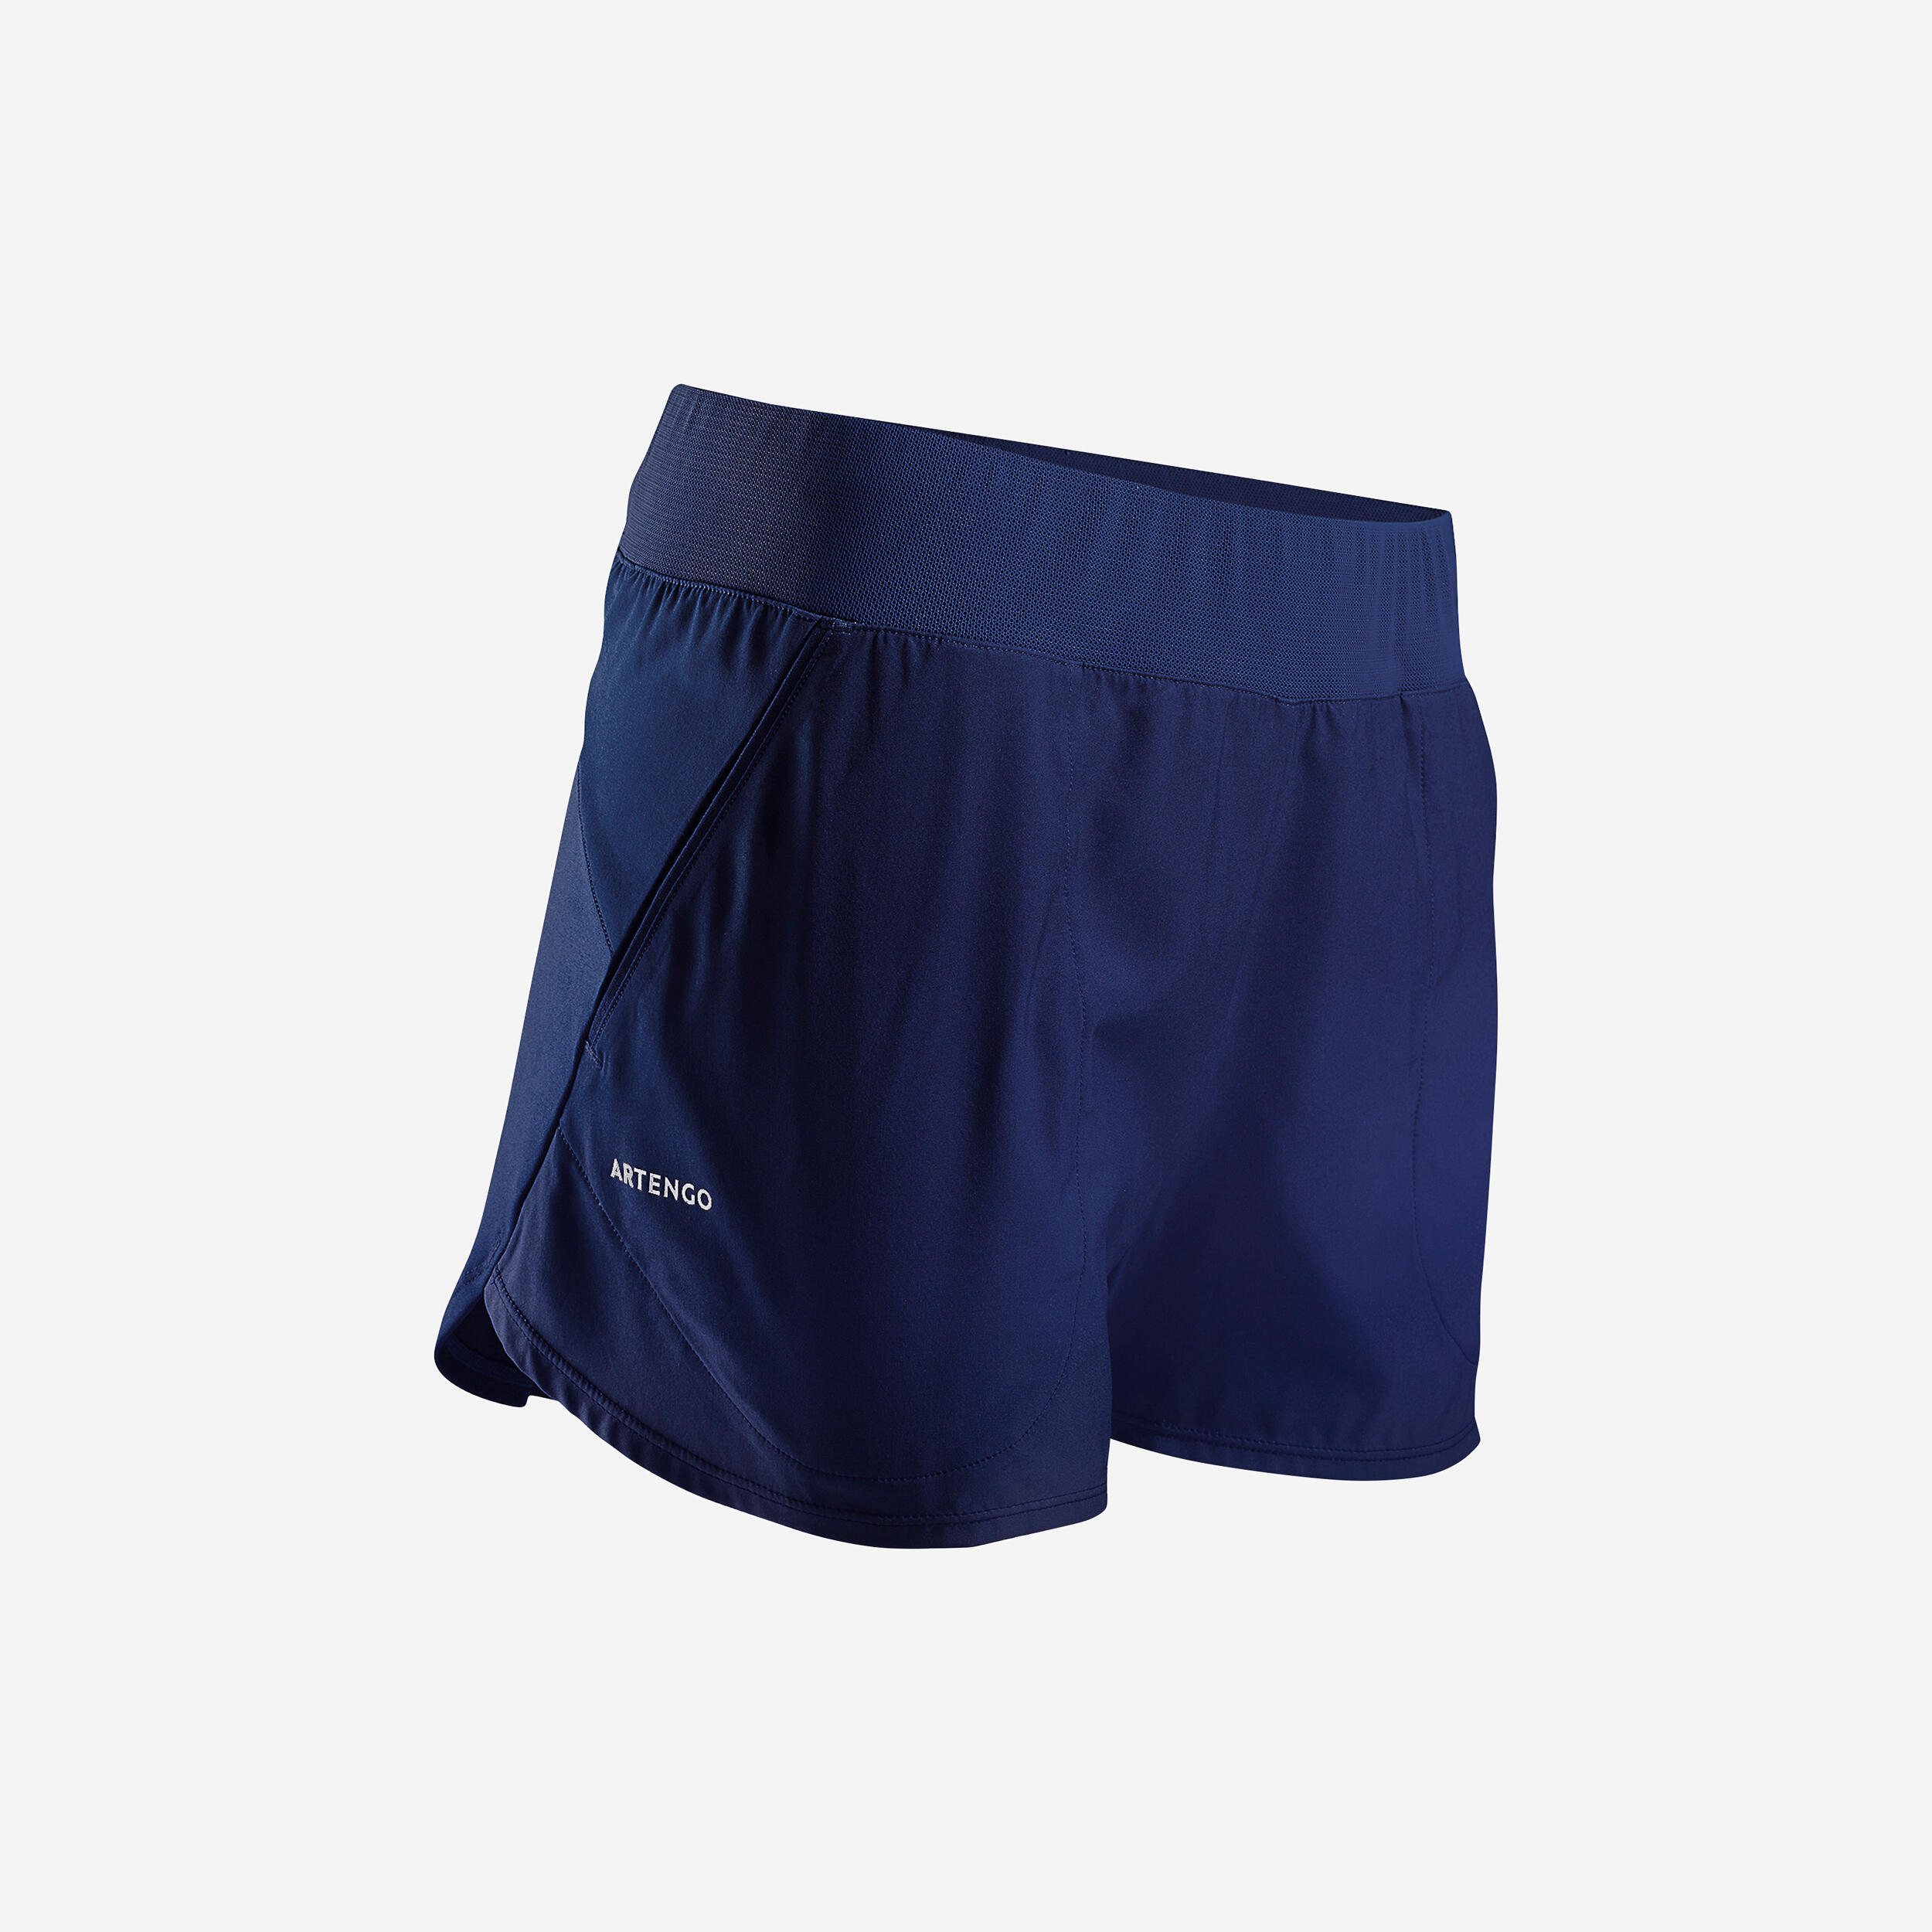 ARTENGO Women's Tennis Quick-Dry Soft Pockets Shorts Dry 500 - Blue